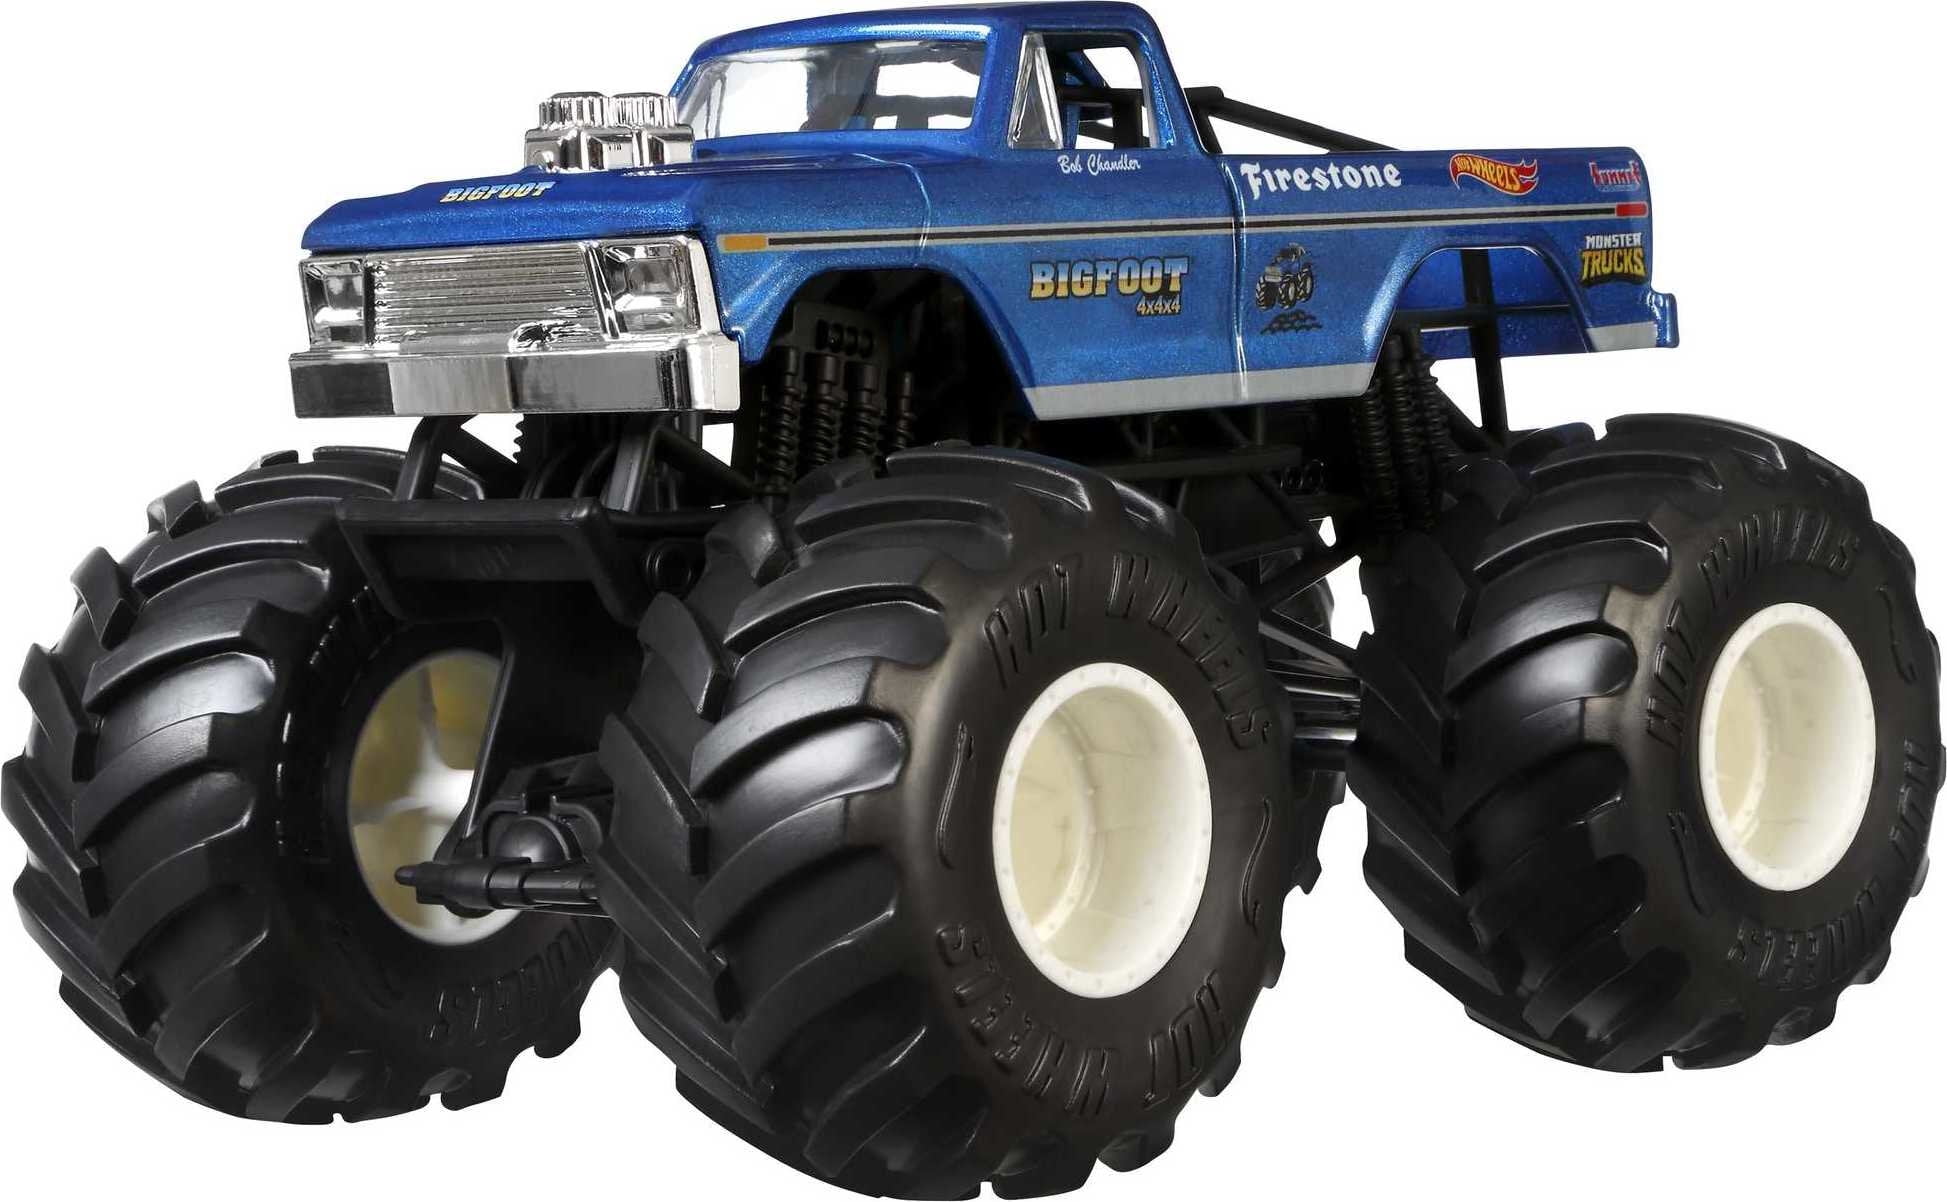 Hot Wheels Monster Trucks Oversized Assorted 1ct – Franklin Square